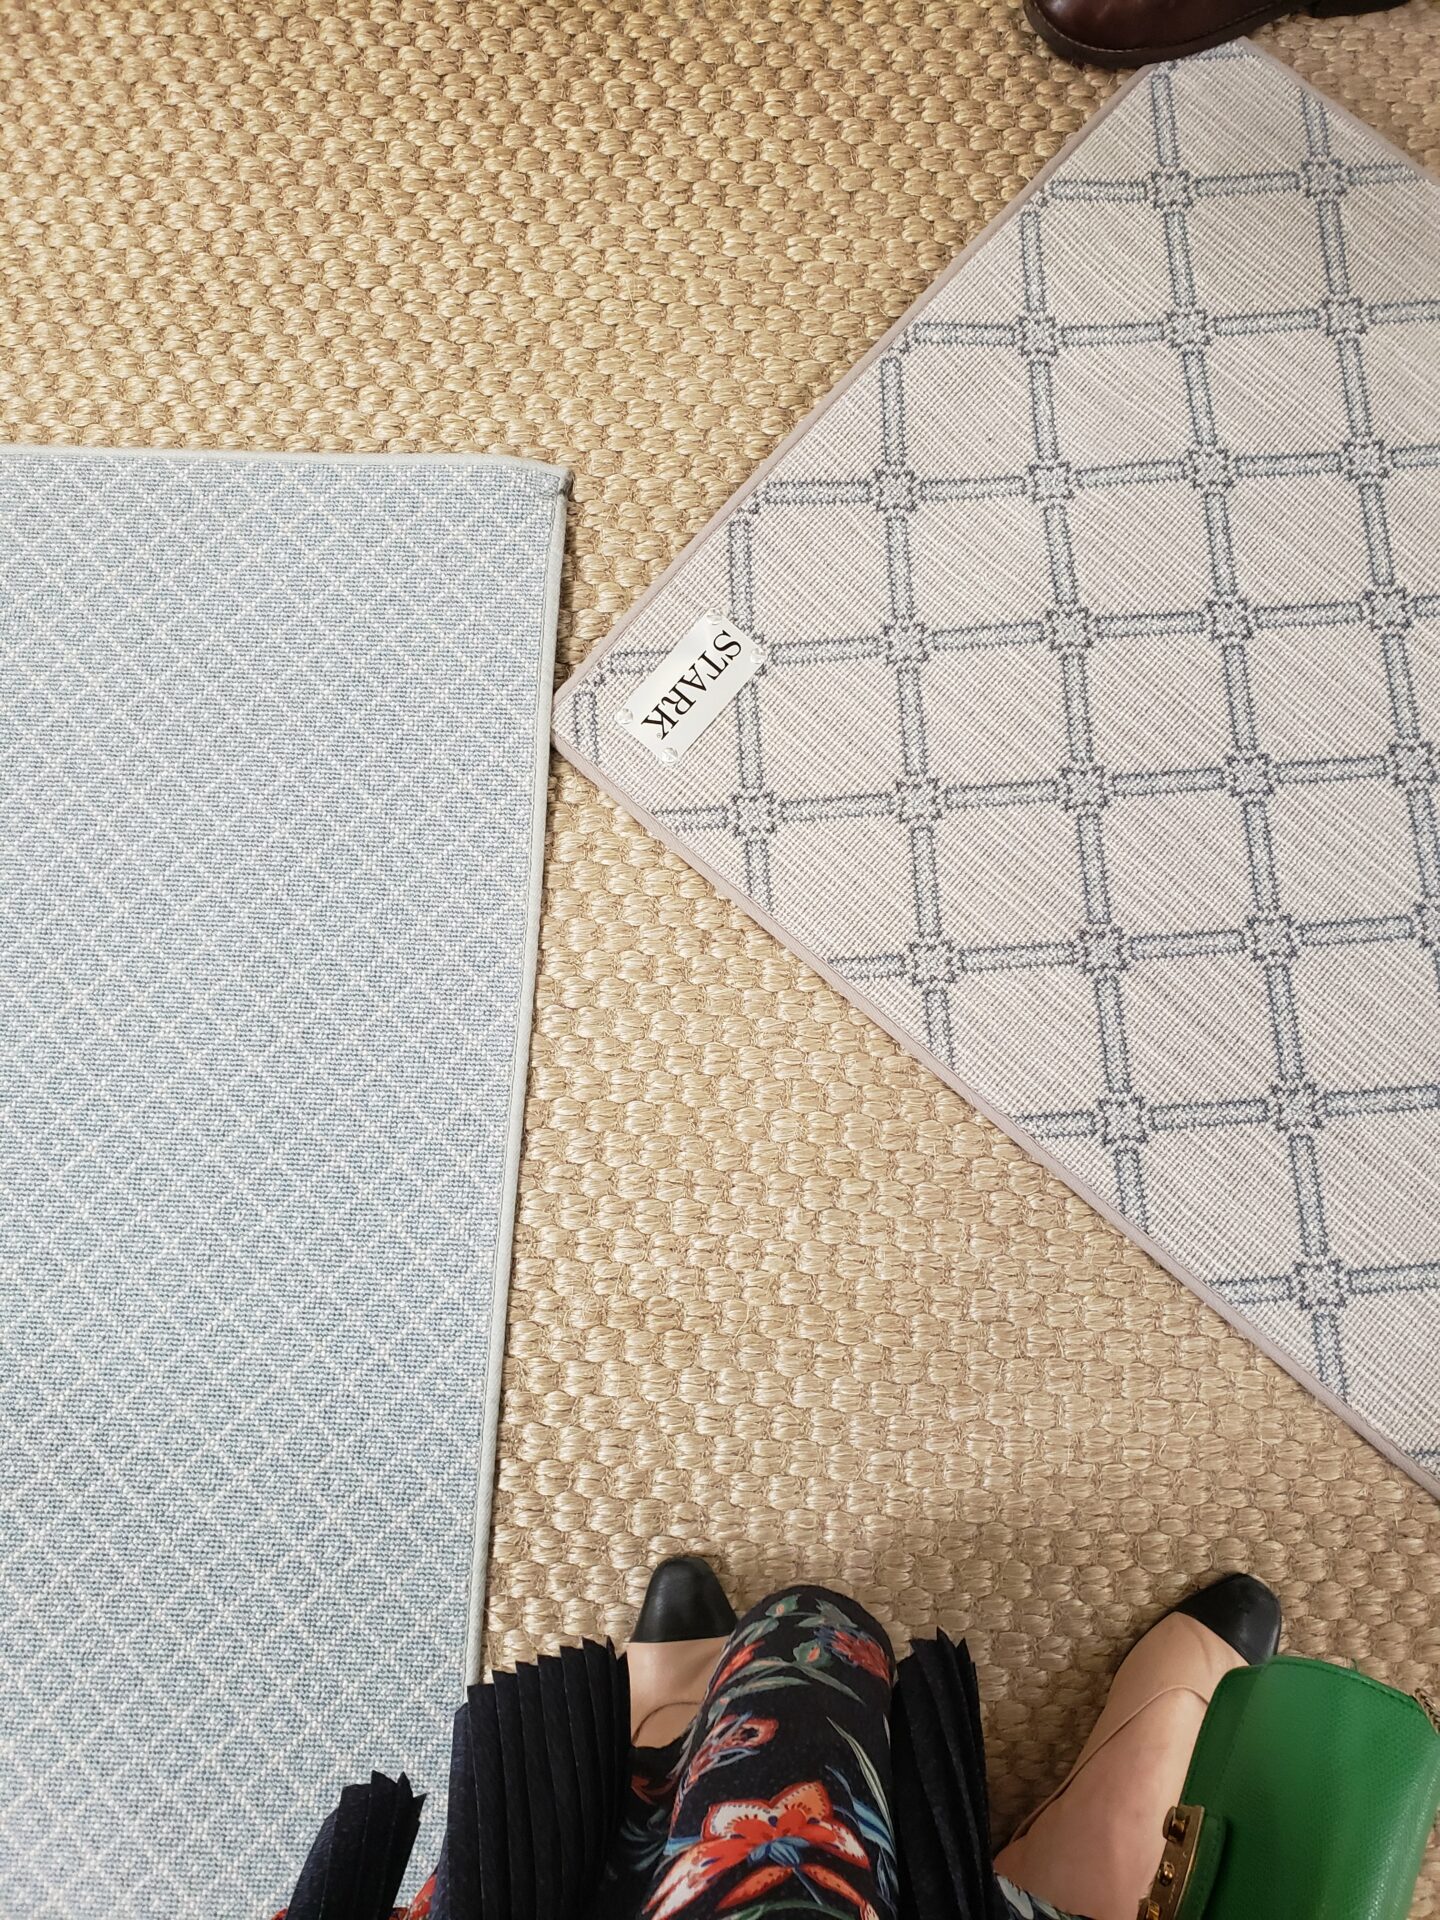 Closet Carpet Options from Stark Carpets